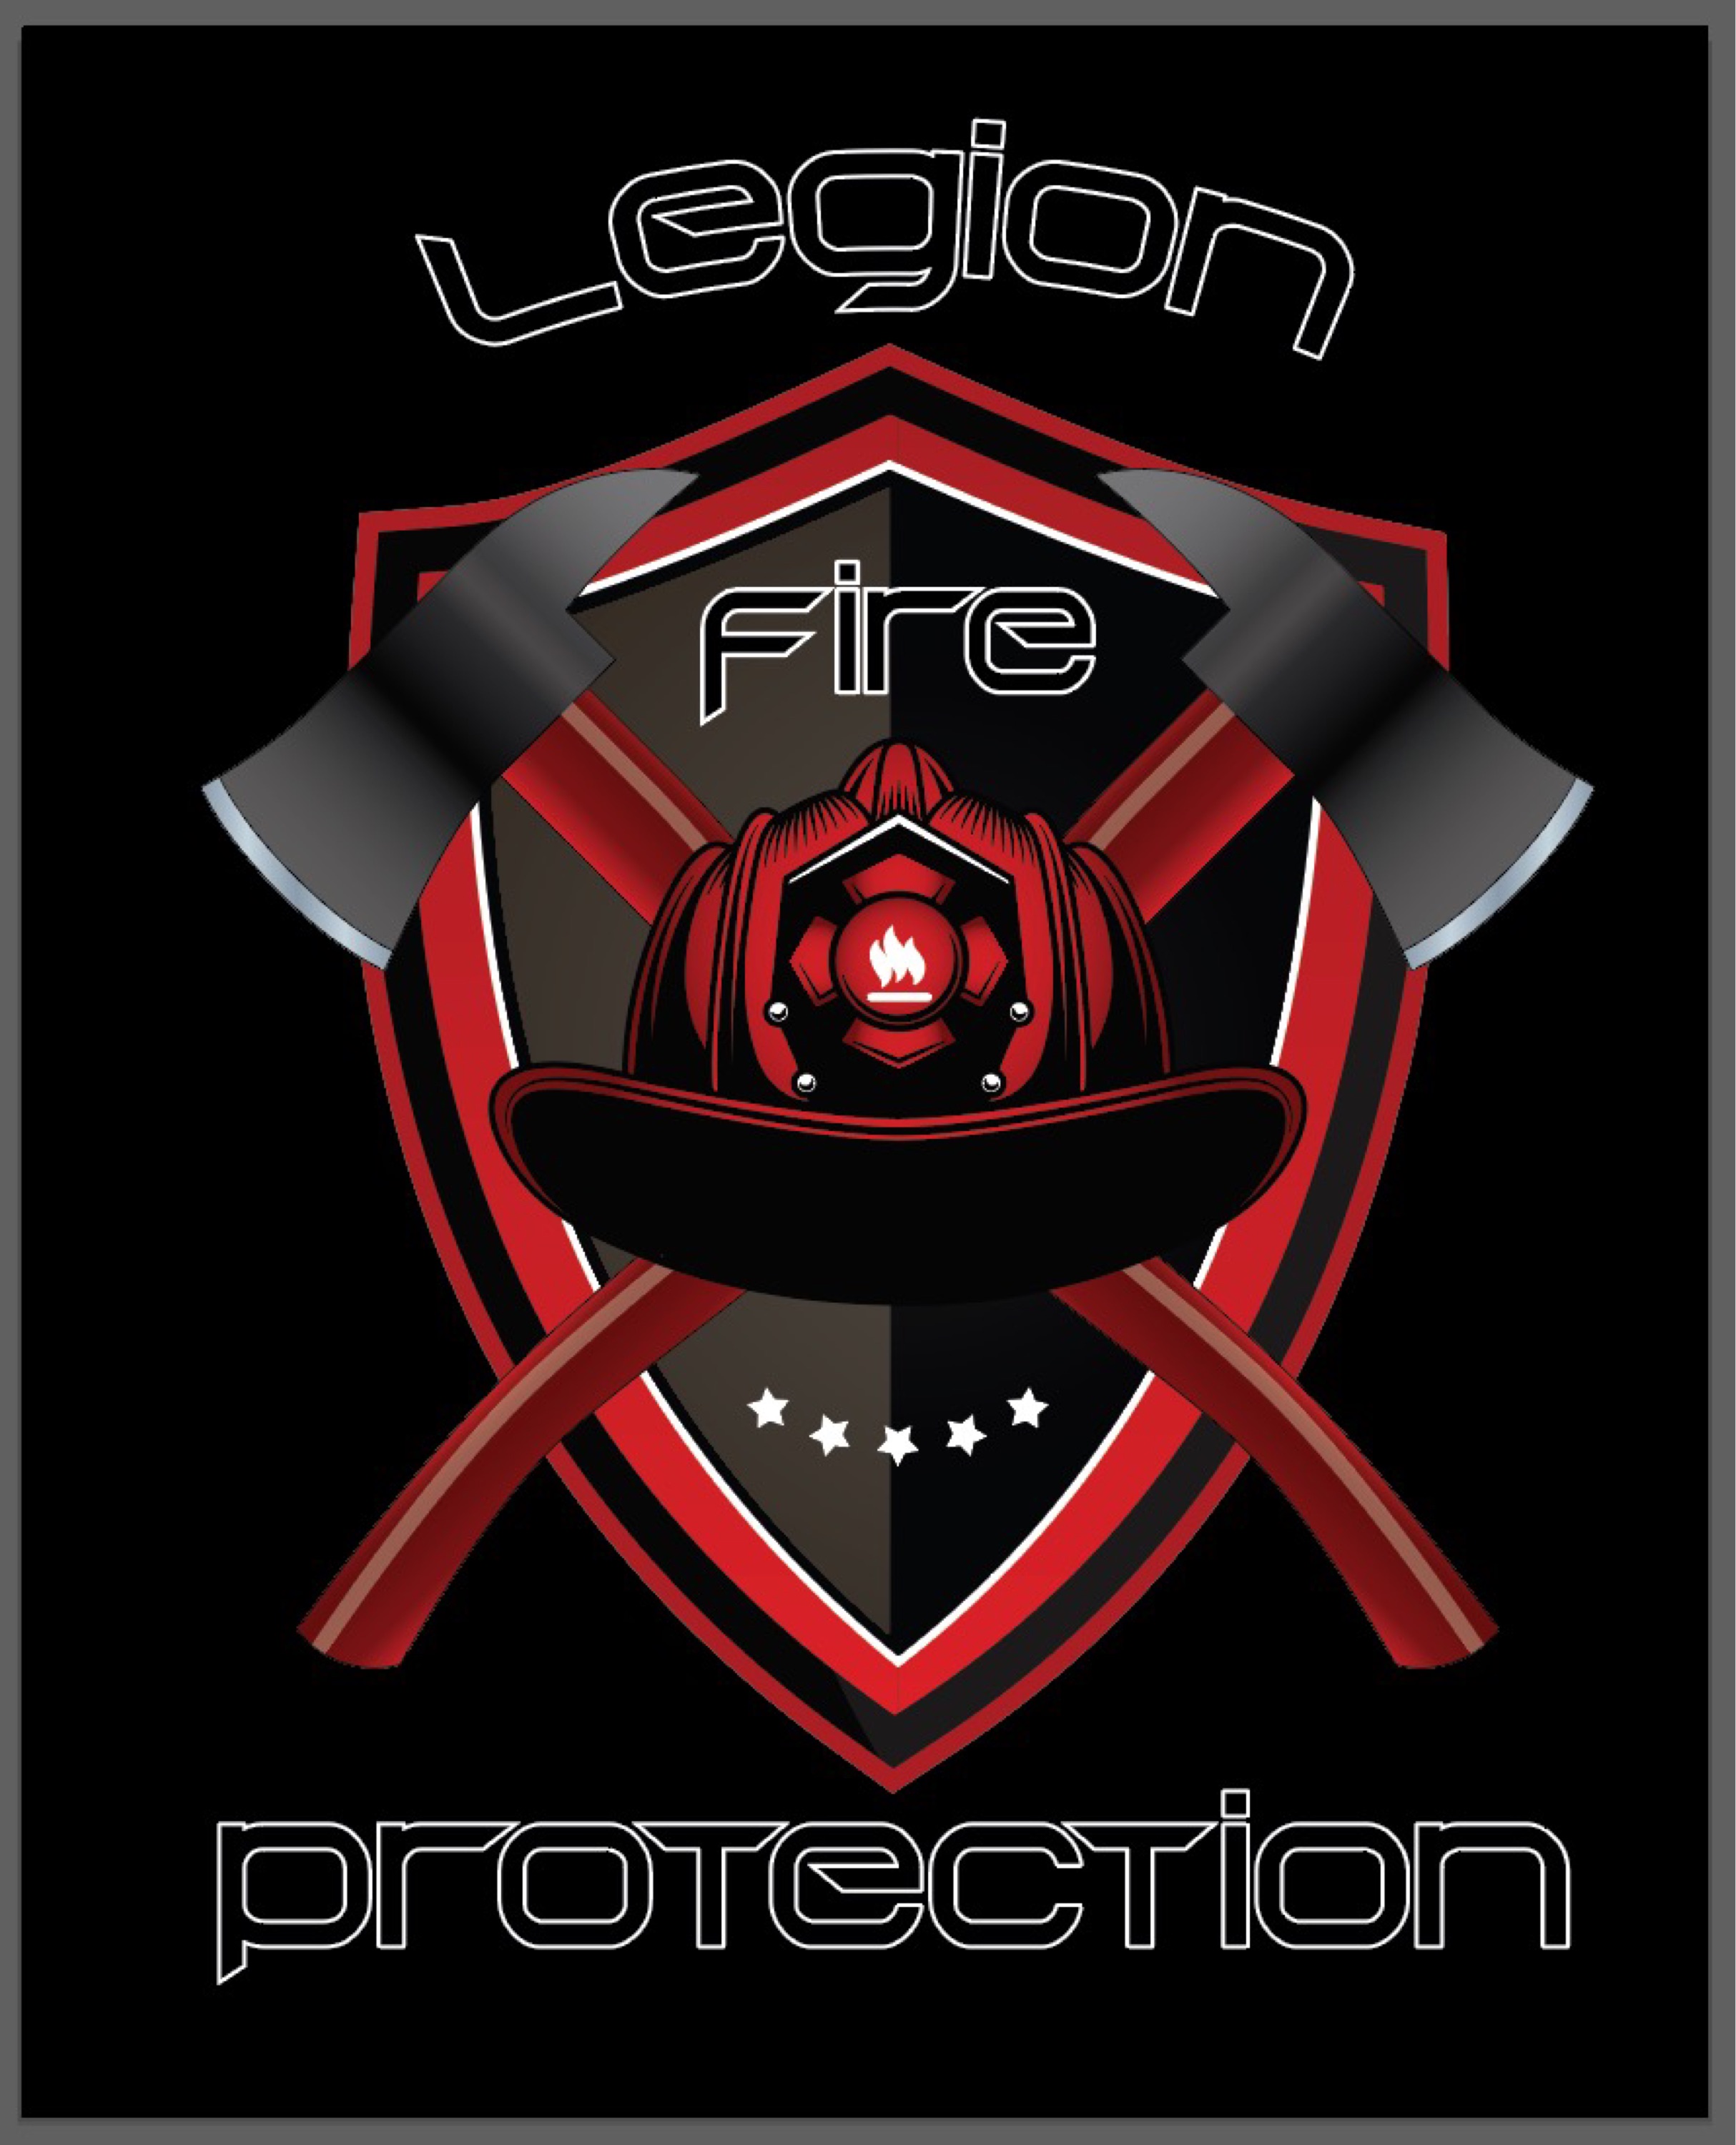 Legion Fire Protection Logo